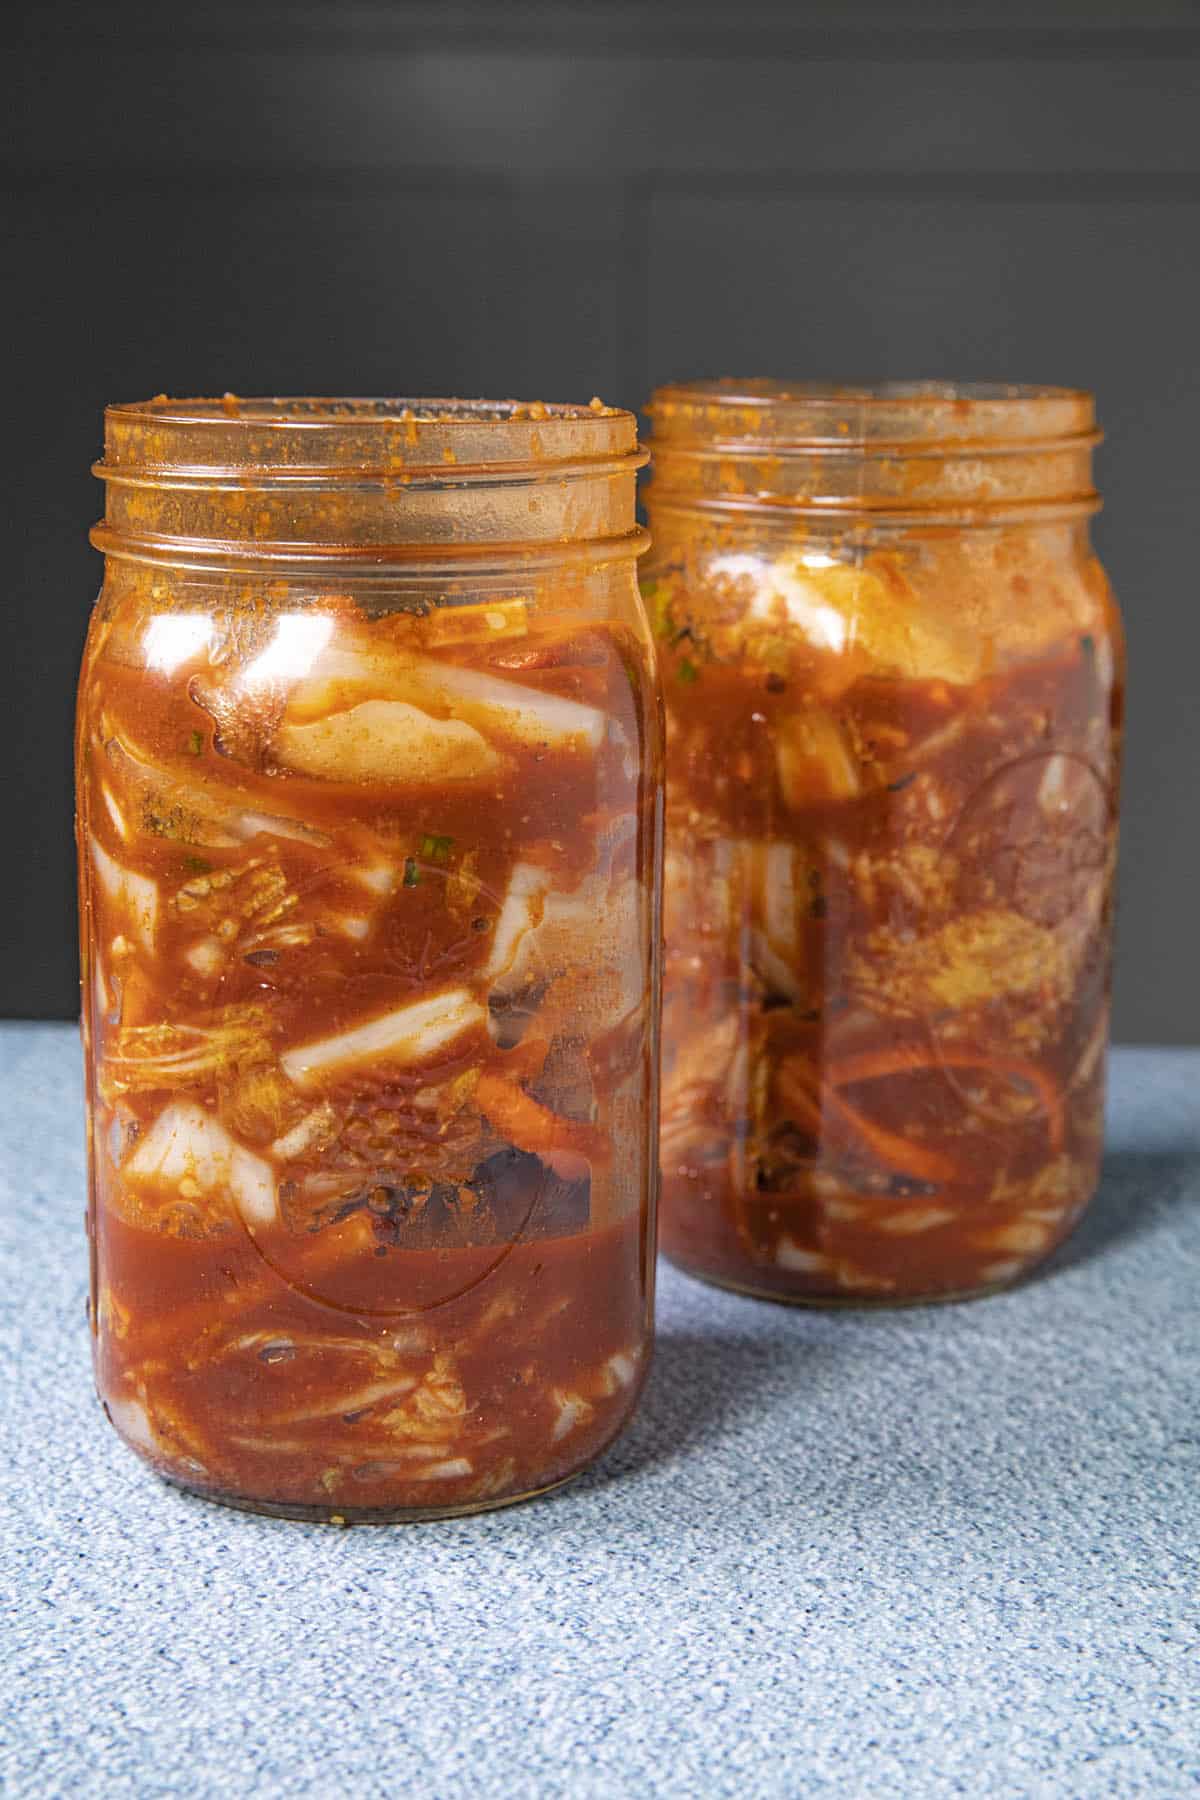 Stuff the kimchi into jars to ferment